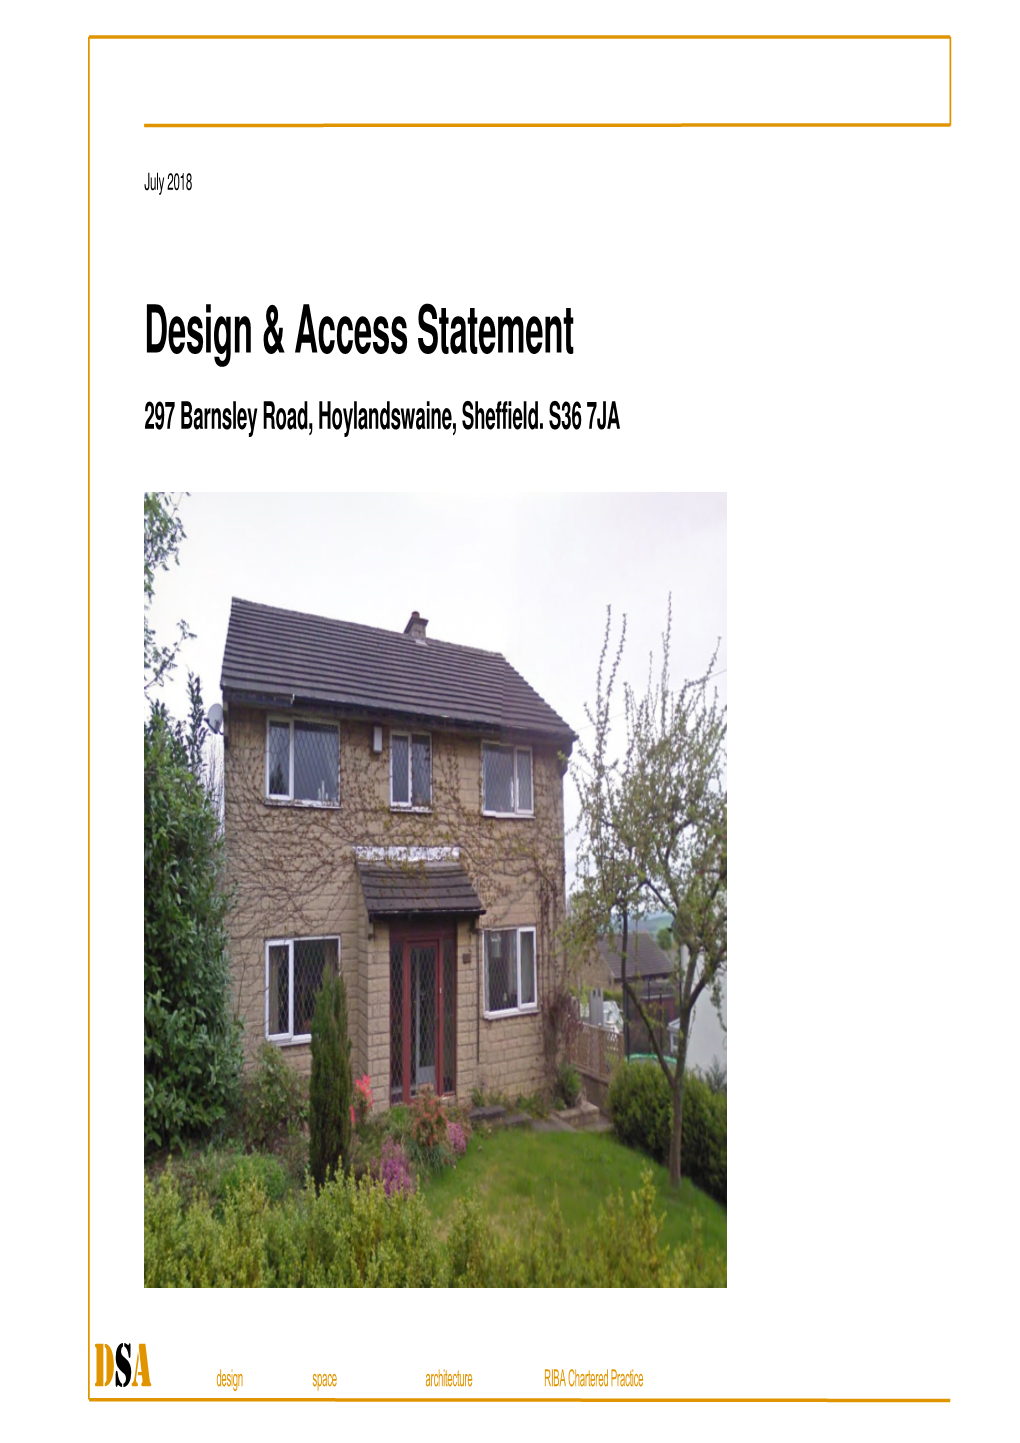 Design & Access Statement